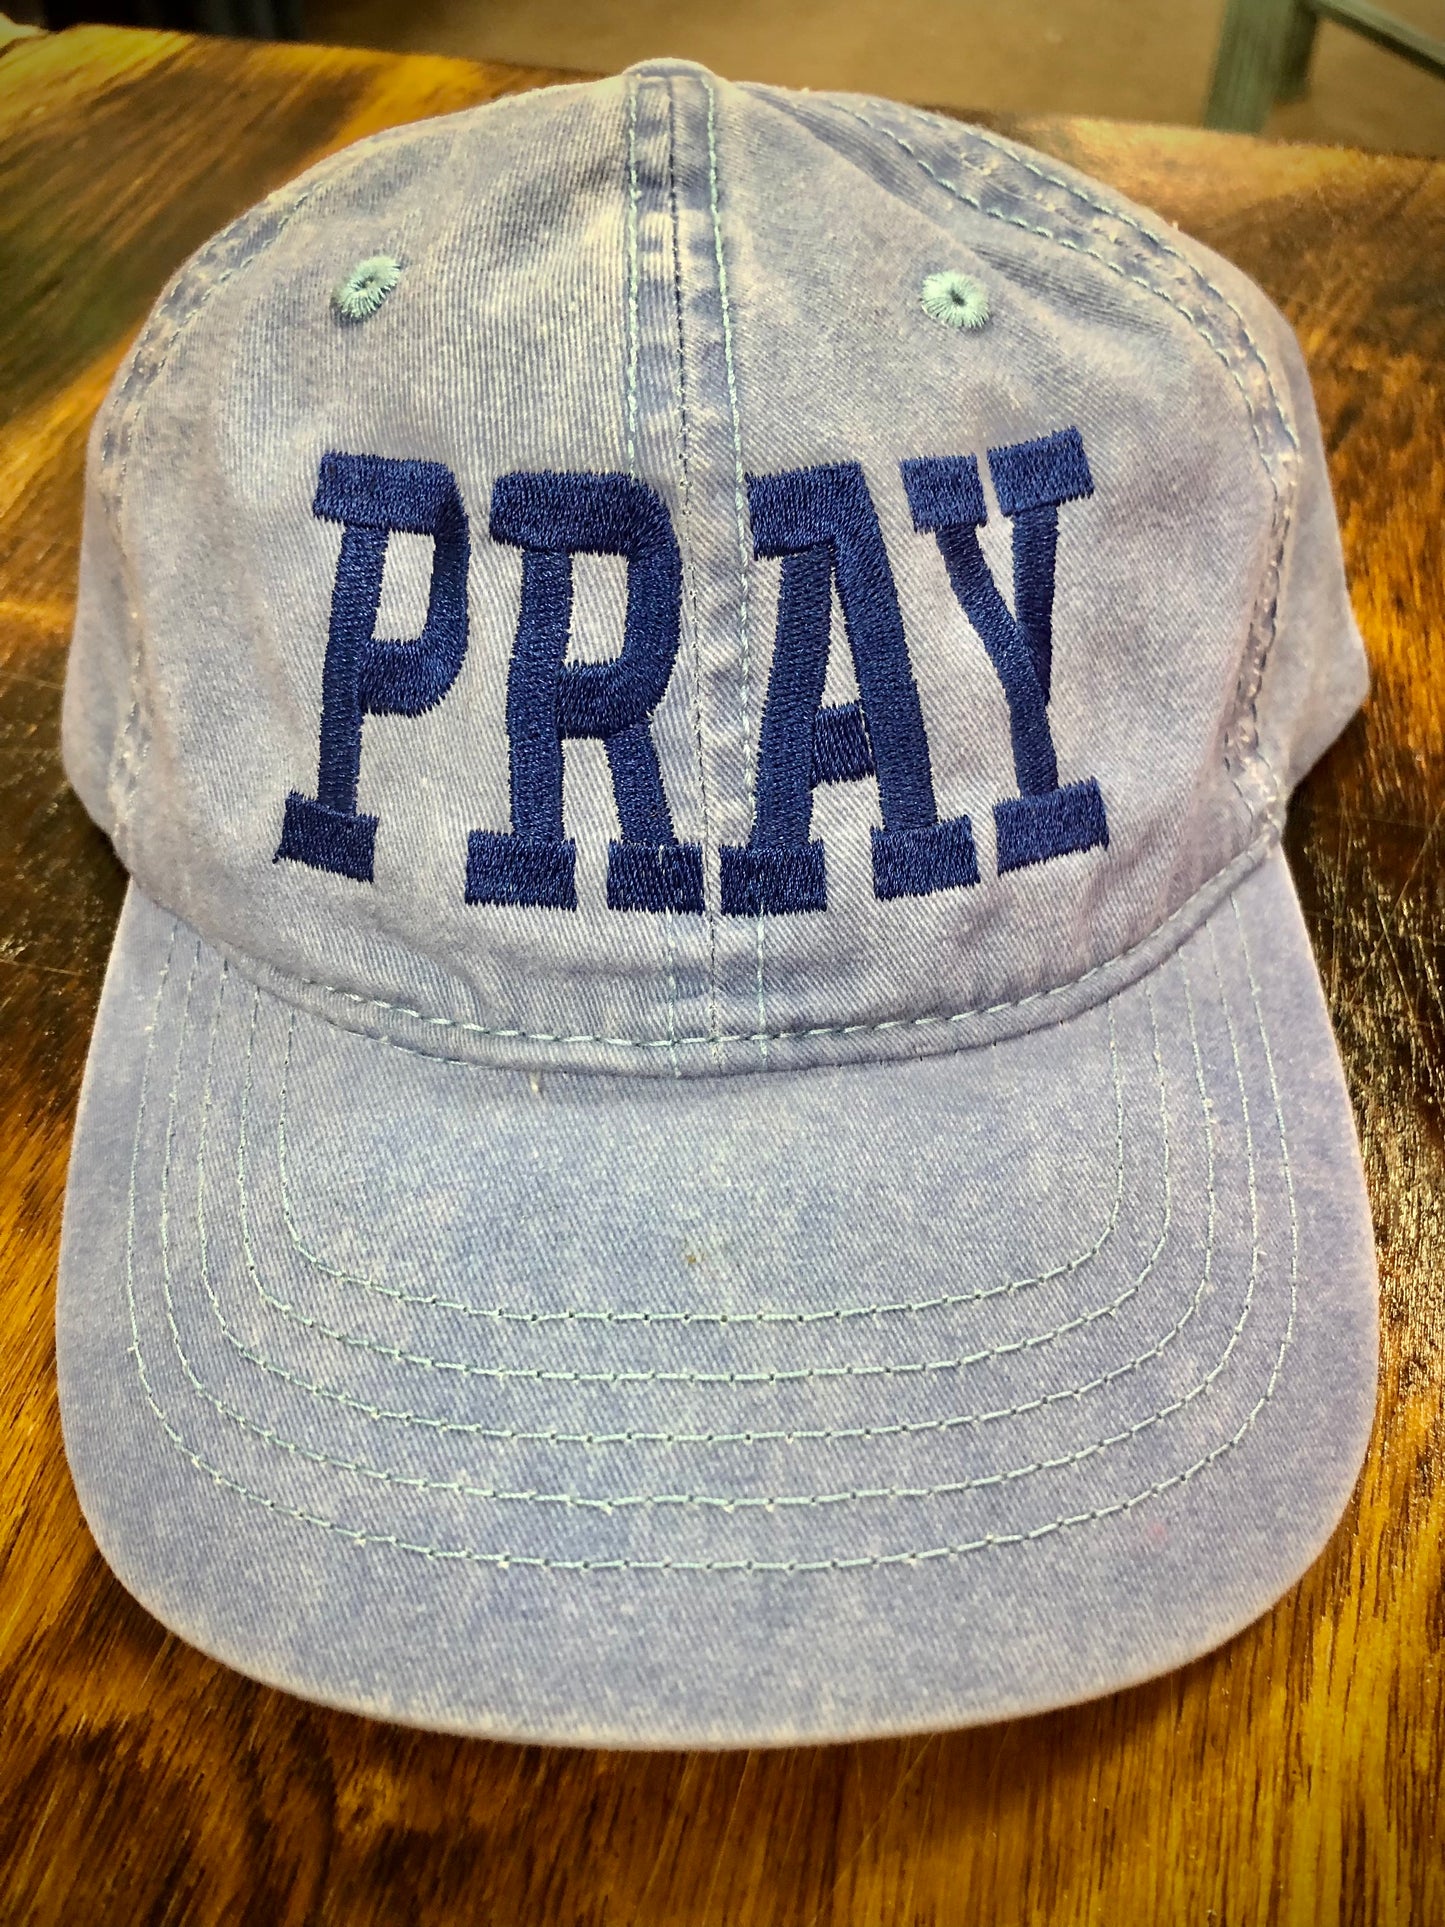 Pray Hats